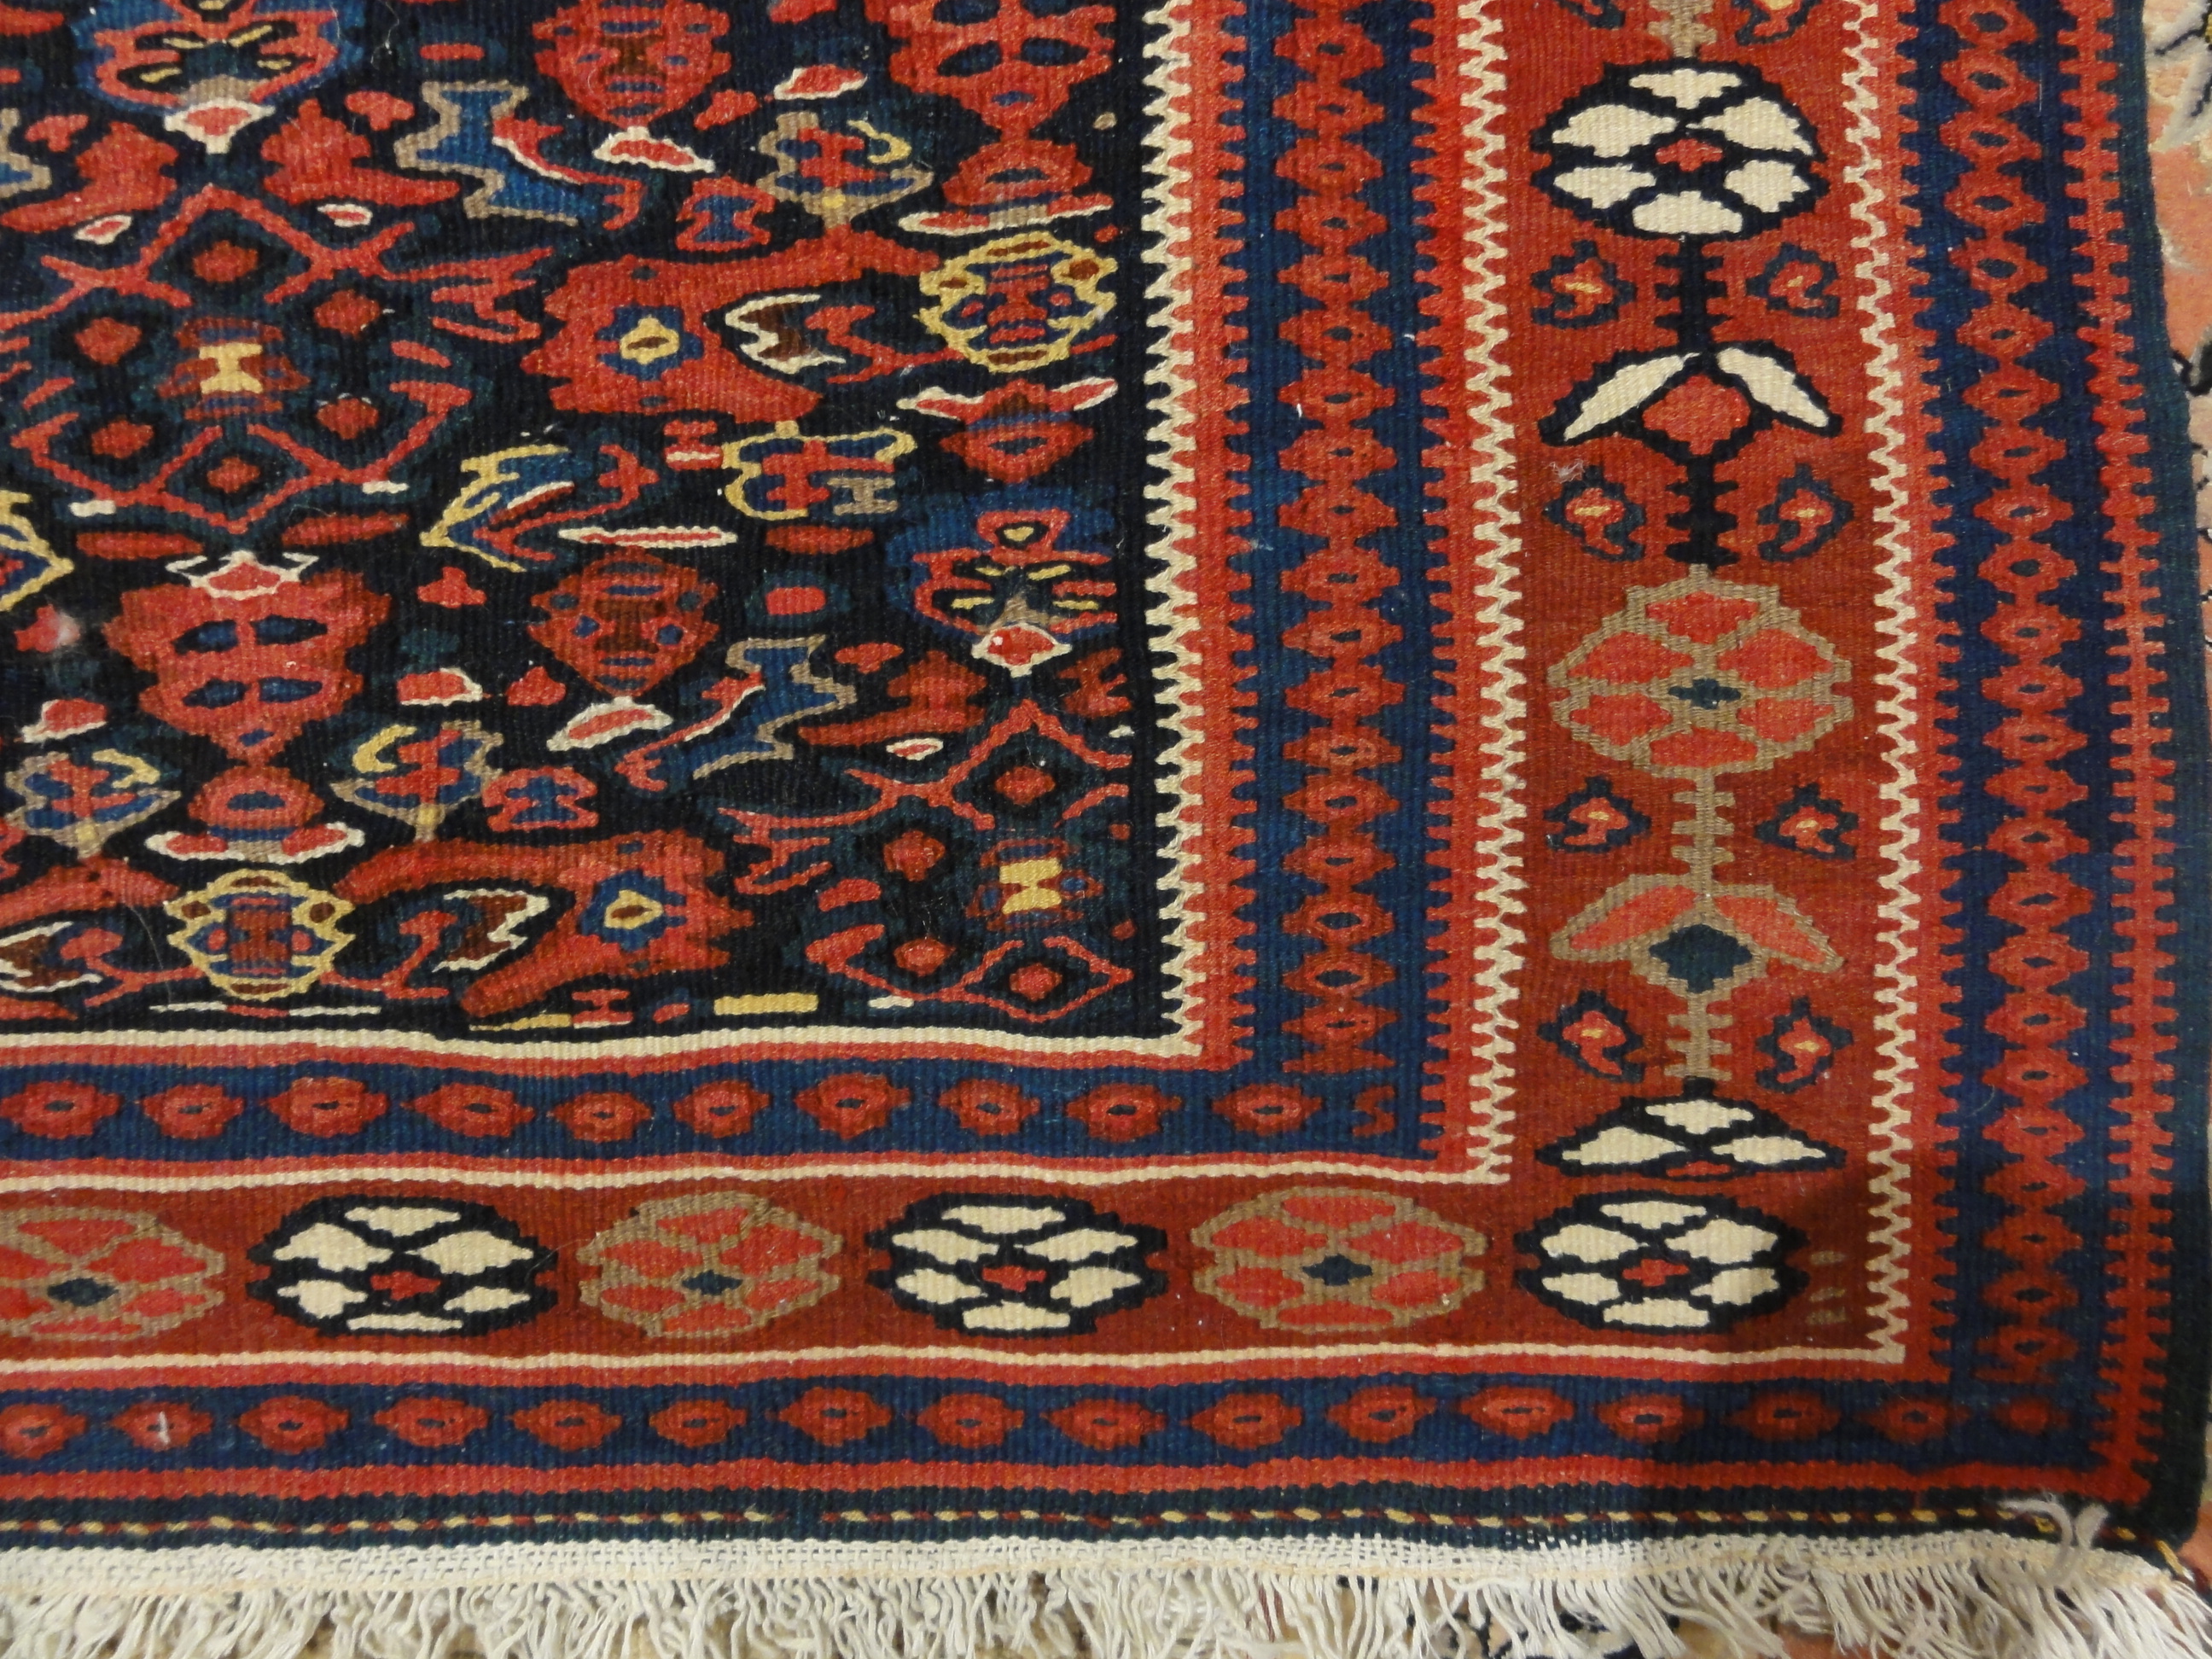 Antique Bijar Kelim Rug. A piece of genuine authentic woven carpet art sold by Santa Barbara Design Center, Rugs and More.